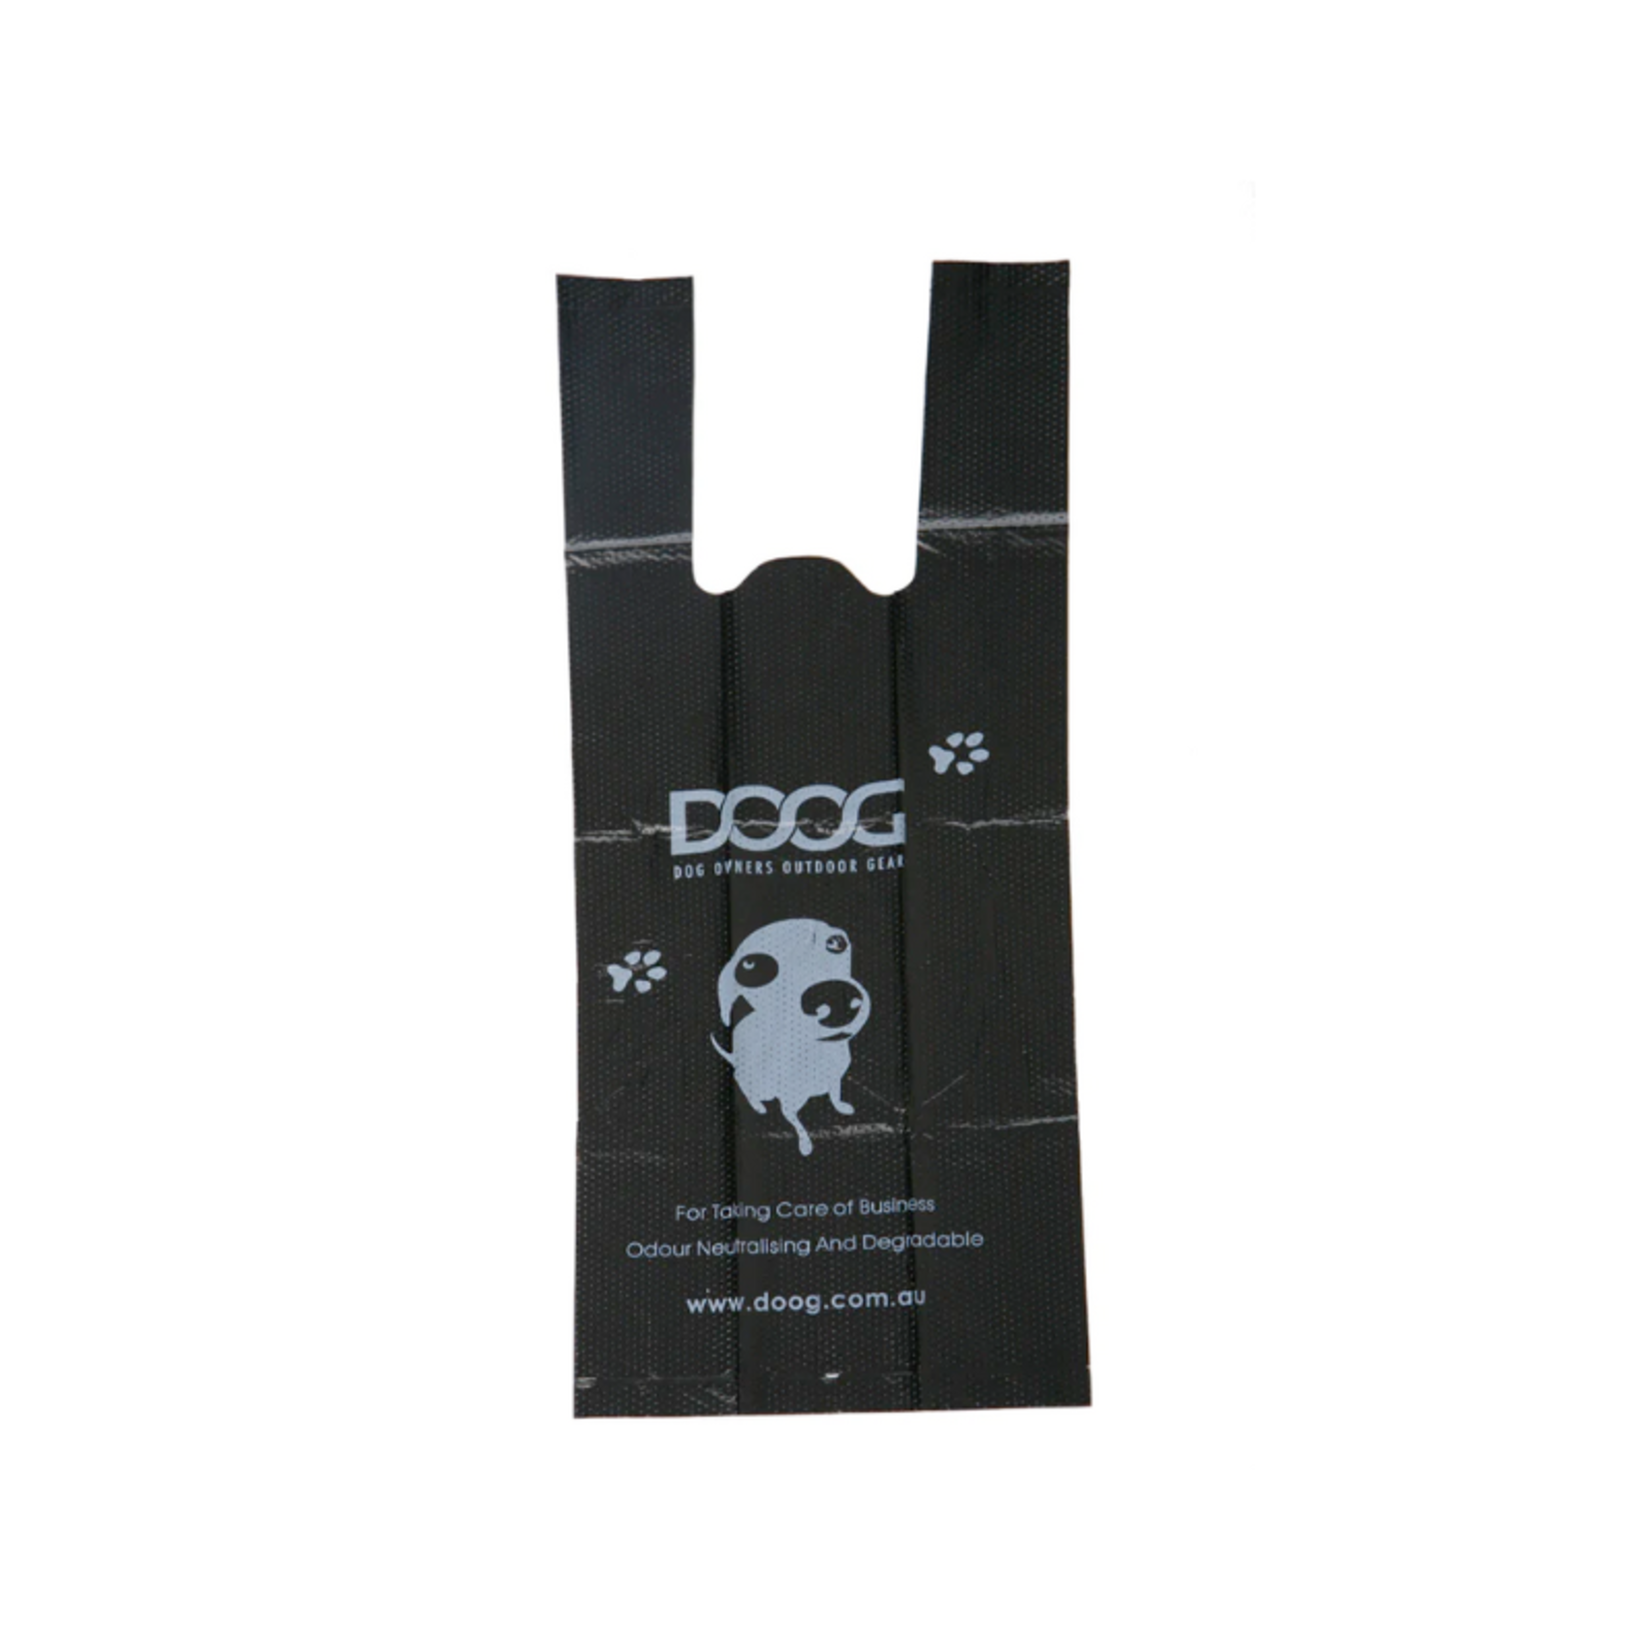 DOOG 60 Bags - Pocket Pack of 20 x 3 - Tidy Poop Bags with Handles - DOOG